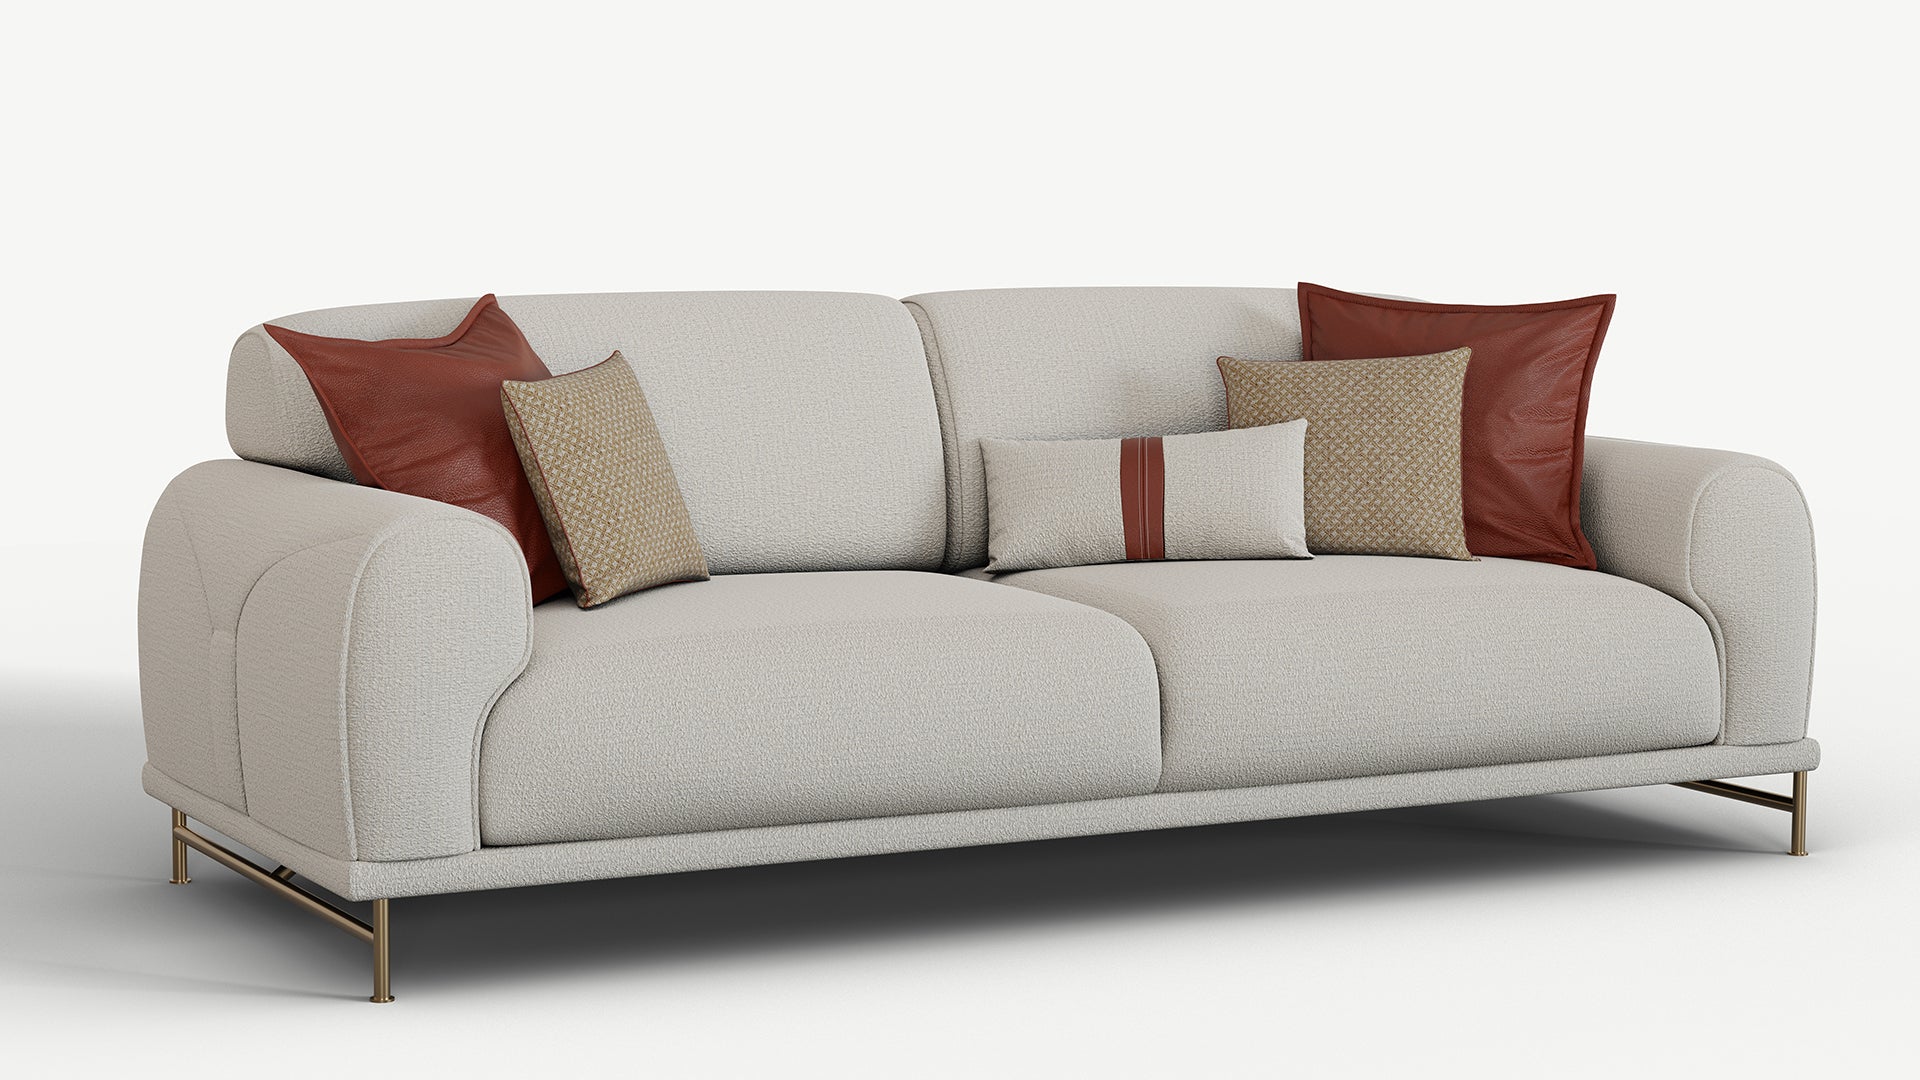 Brita 3 Seater Sofa Bed